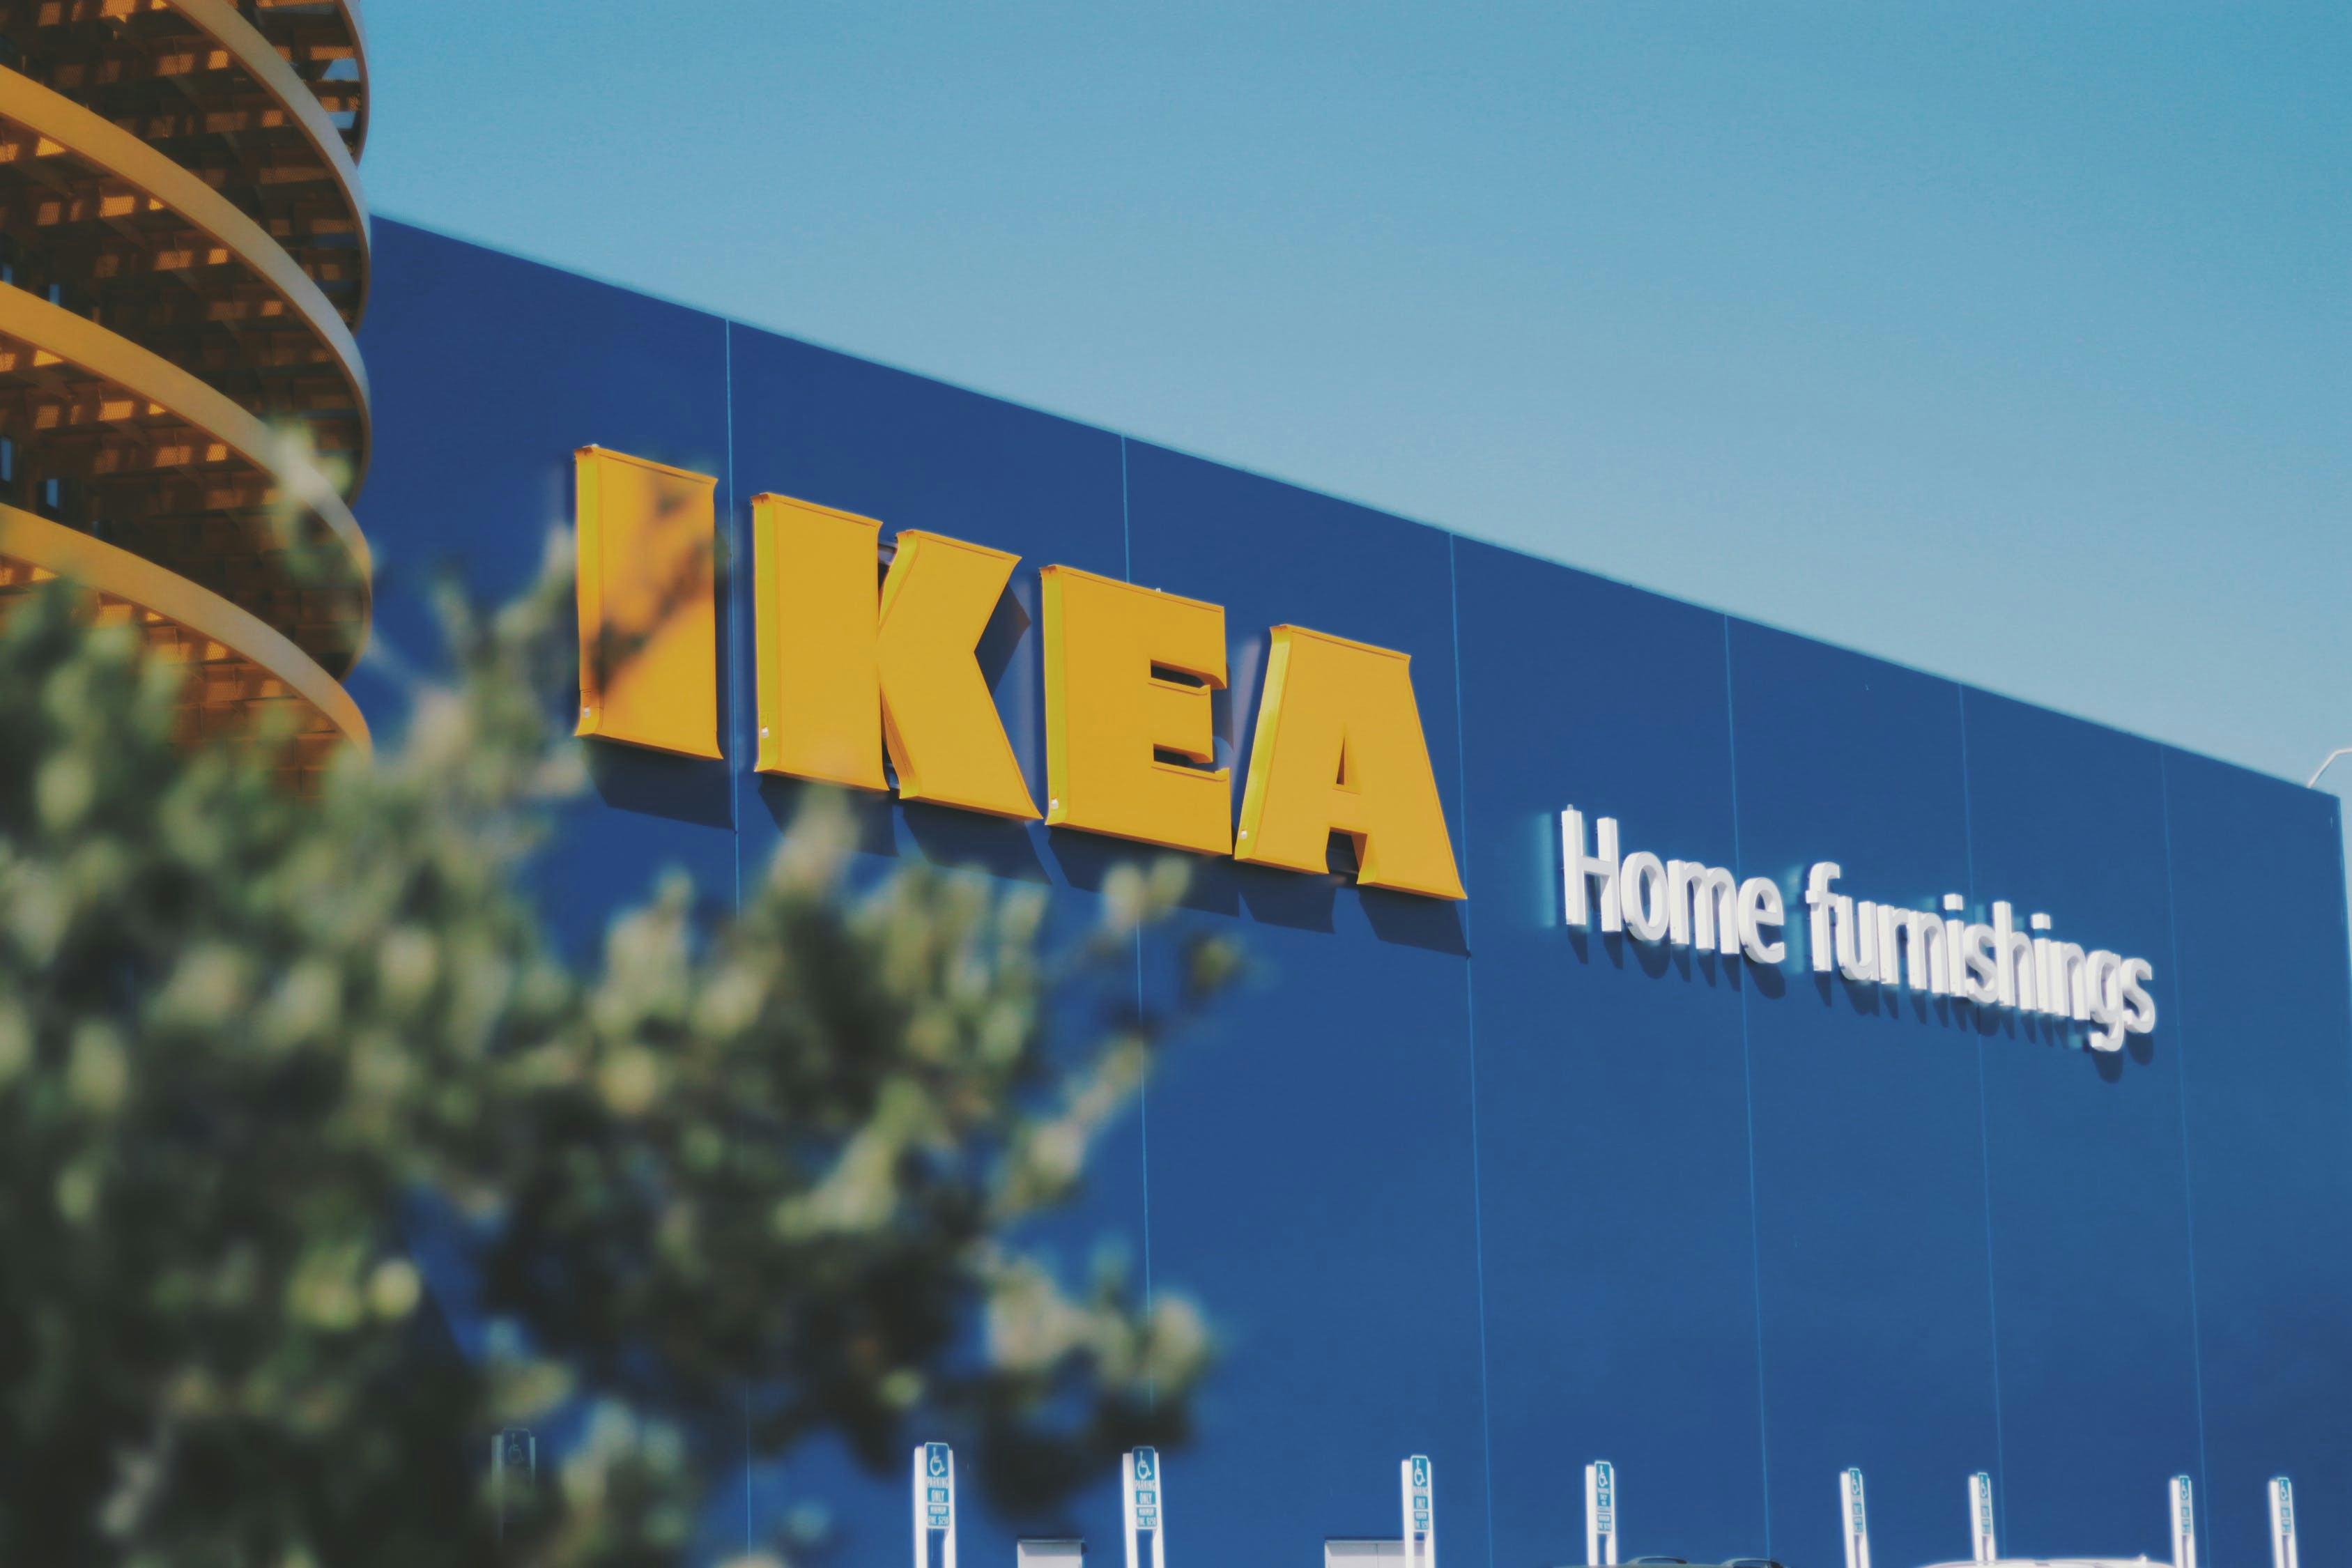 Ikea pilots U.S. furniture buyback program as it eyes national launch